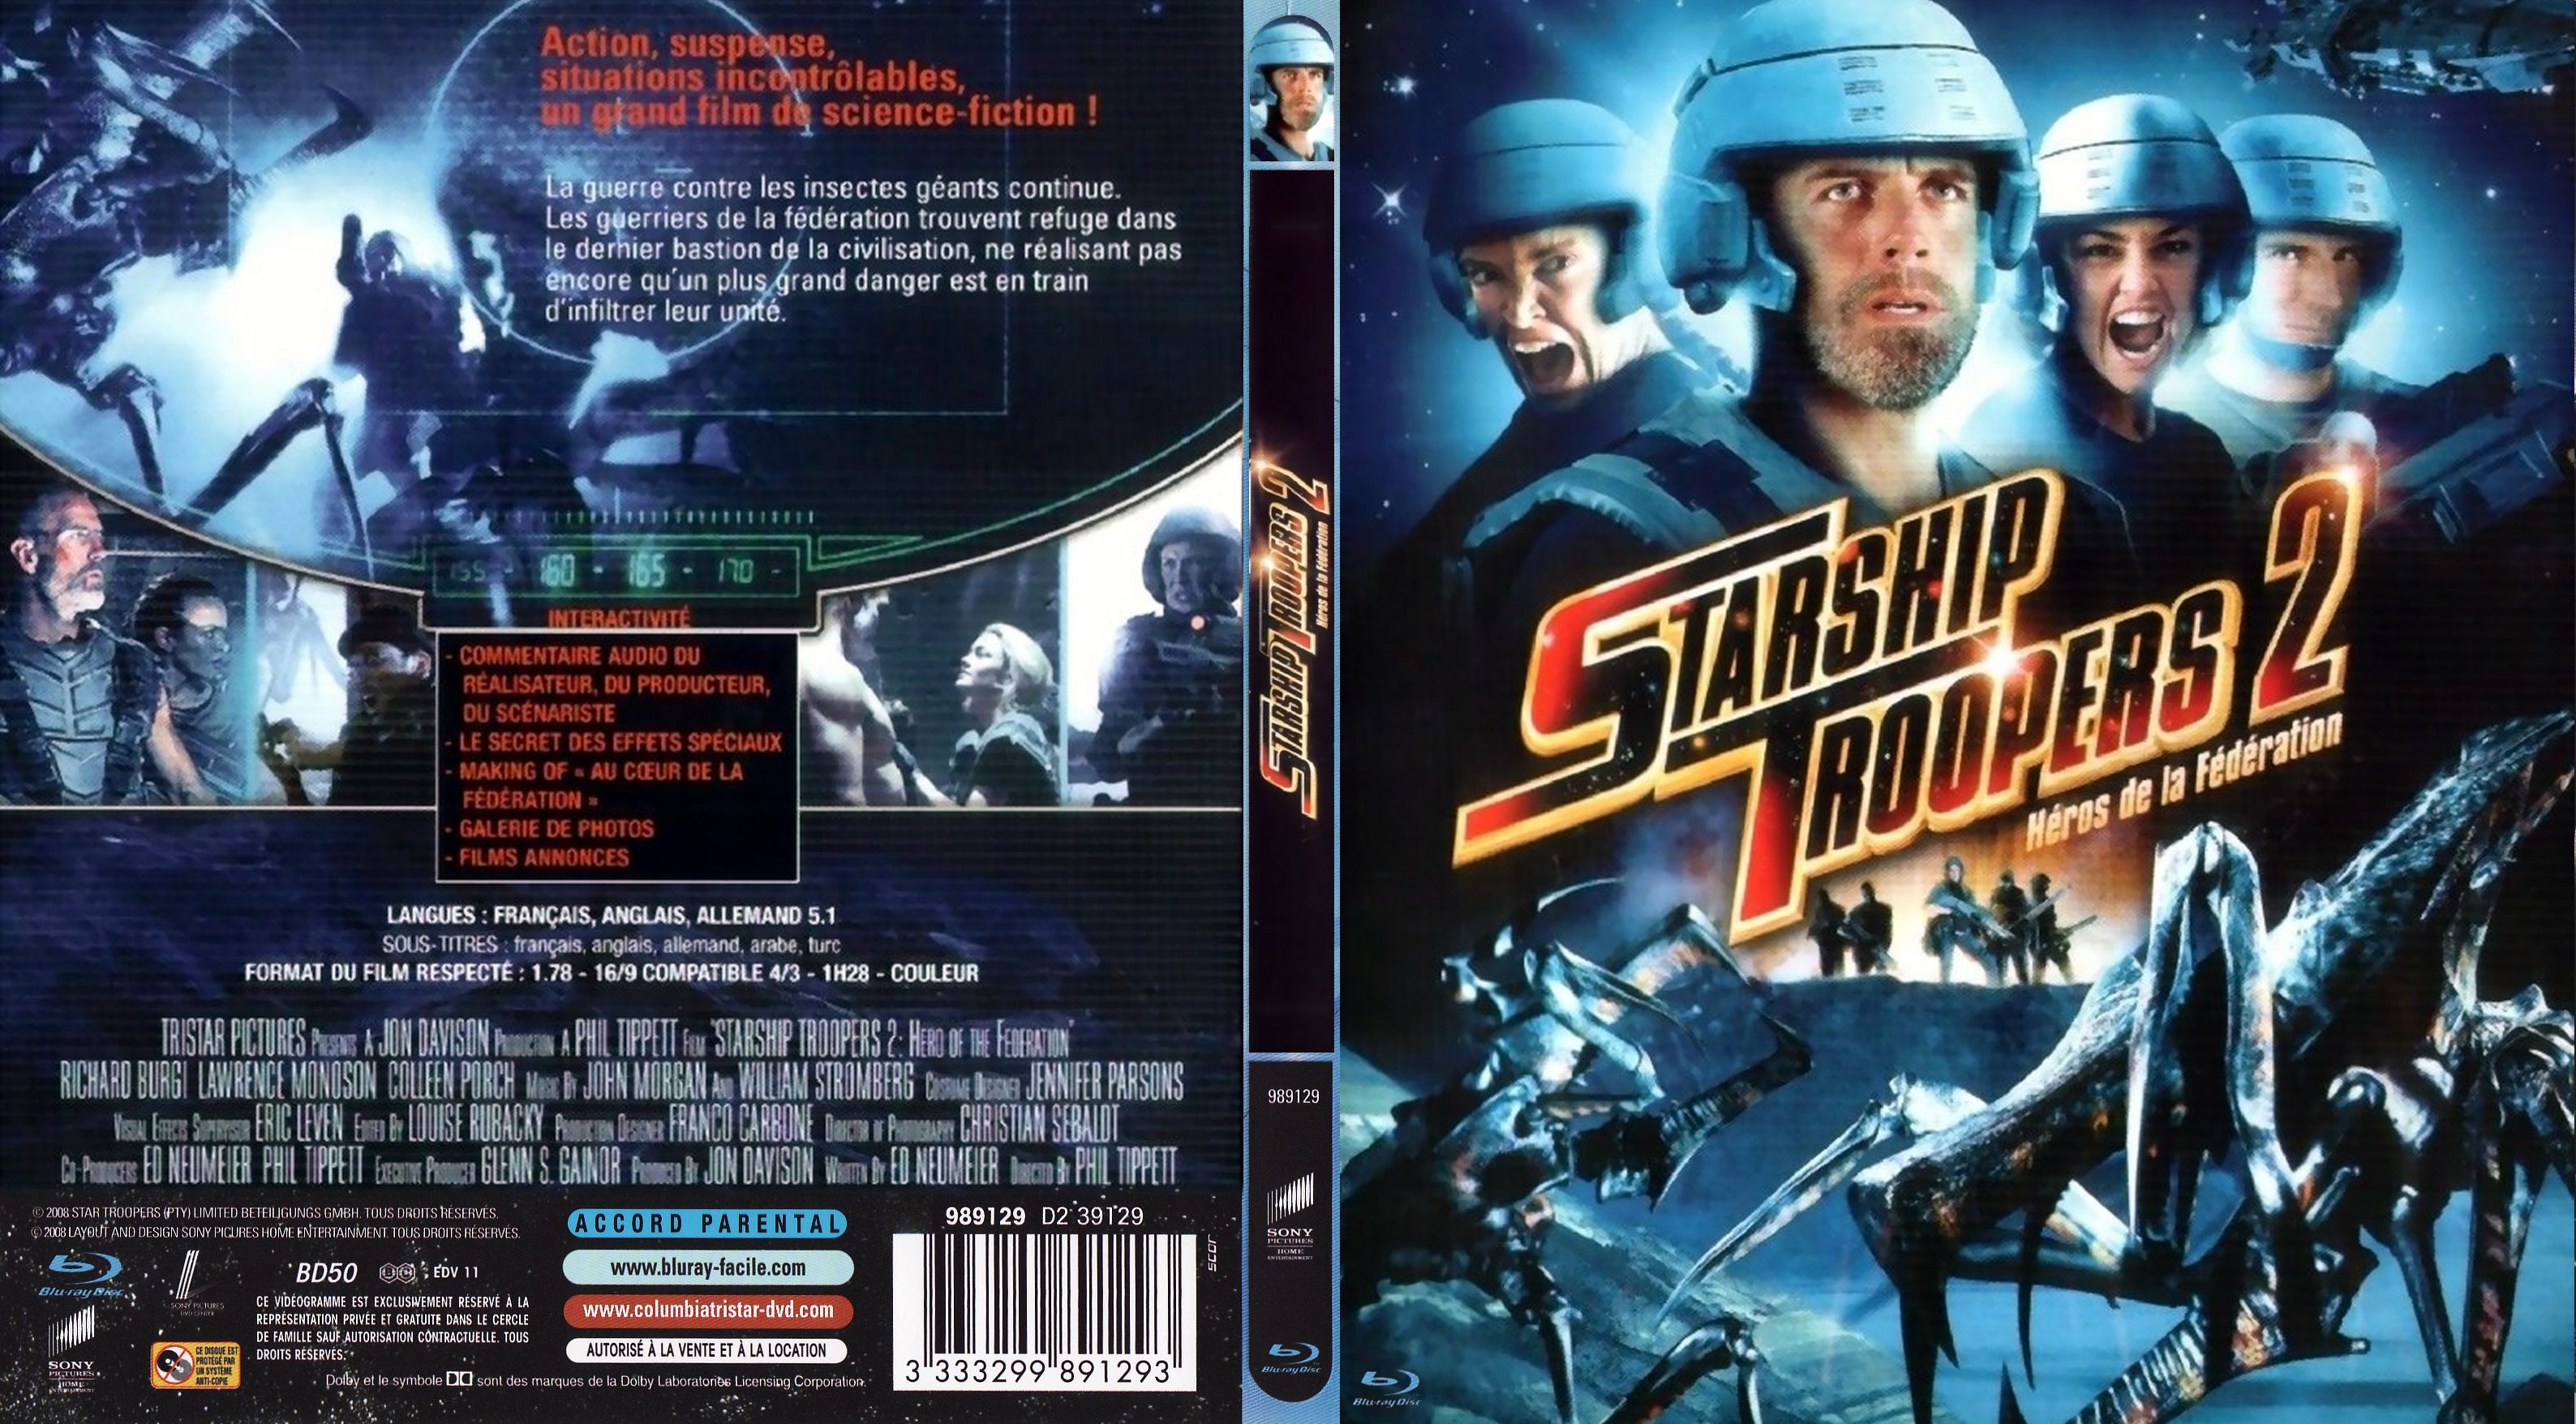 Jaquette DVD Starship troopers 2 (BLU-RAY) custom